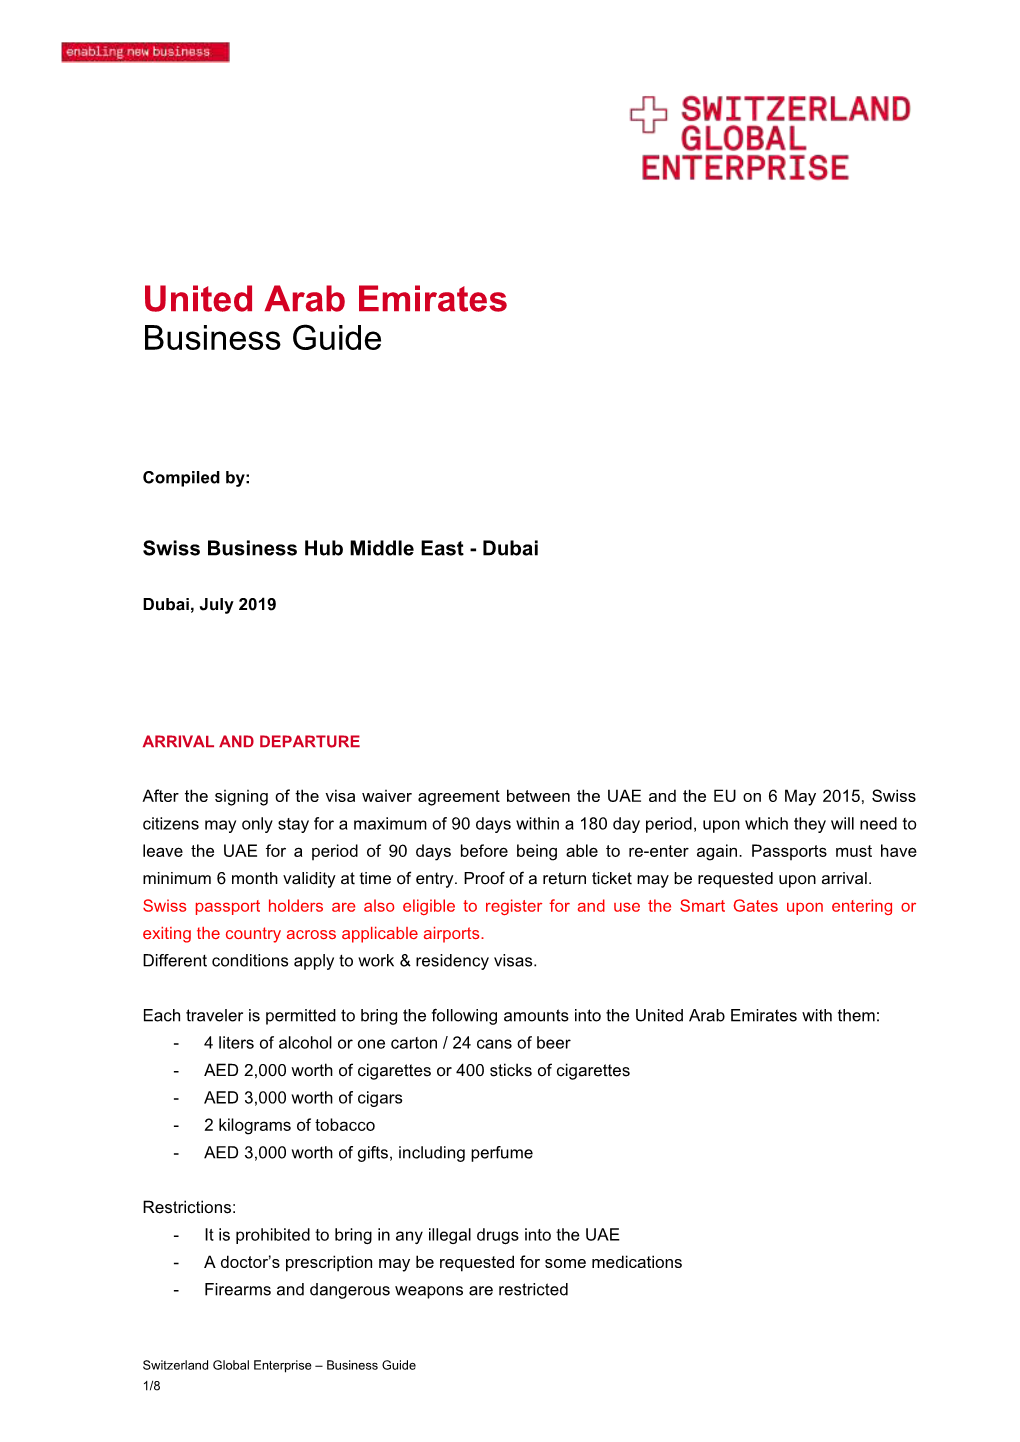 United Arab Emirates Business Guide